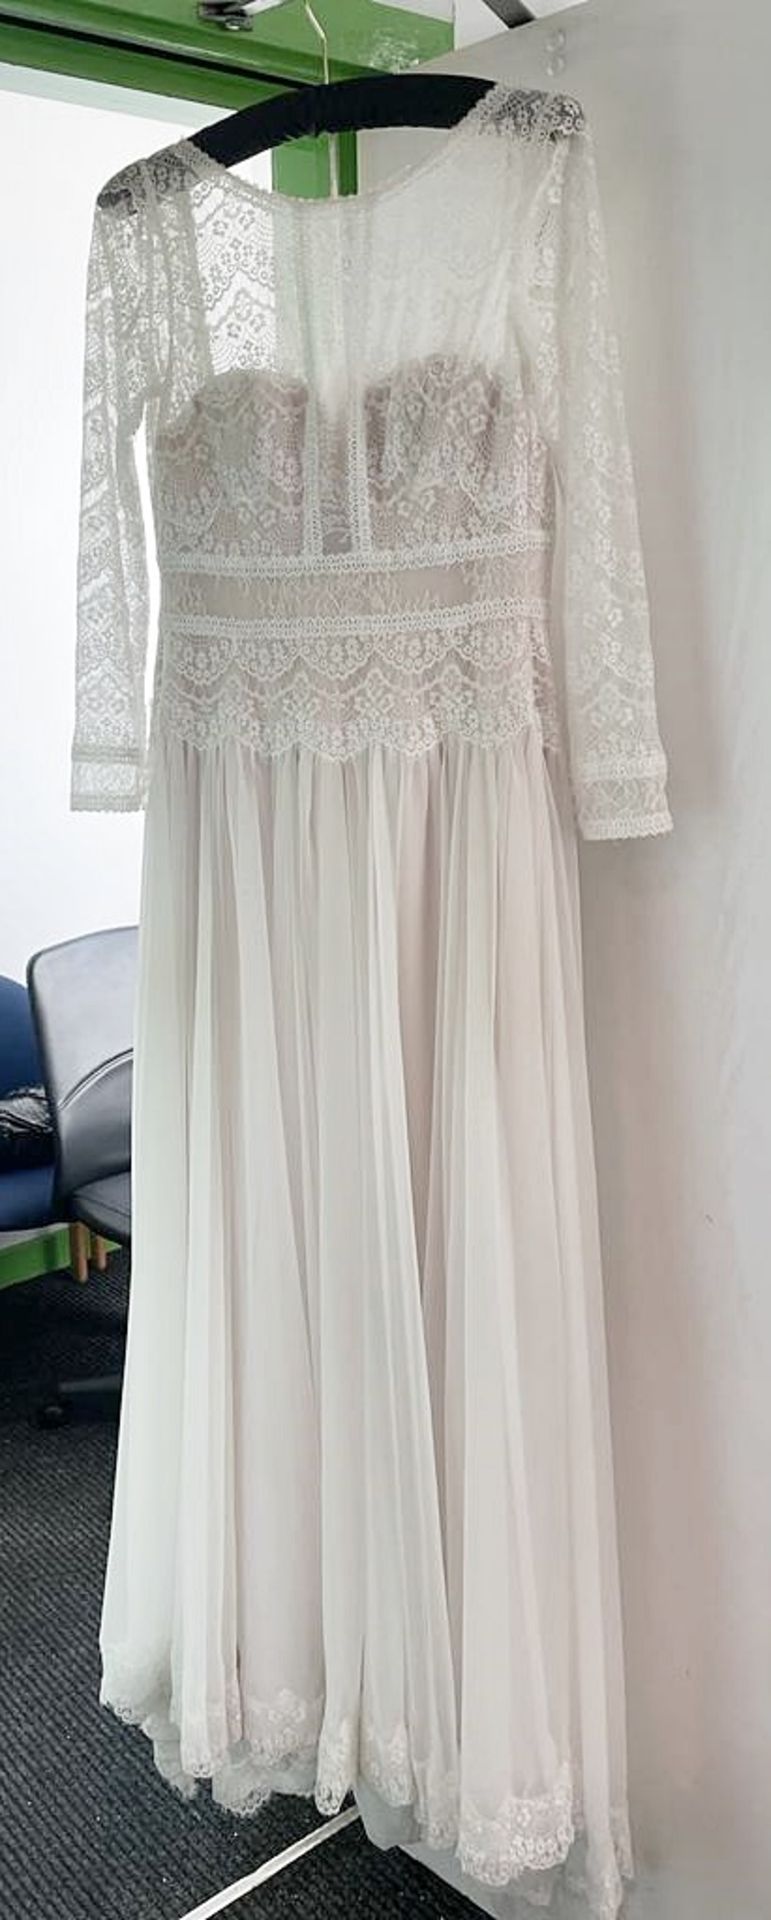 1 x MAGGIE SOTTERO 'Deirdre' Designer Wedding Dress Bridal Gown - Size: UK 10 - Original RRP £15,060 - Image 3 of 11